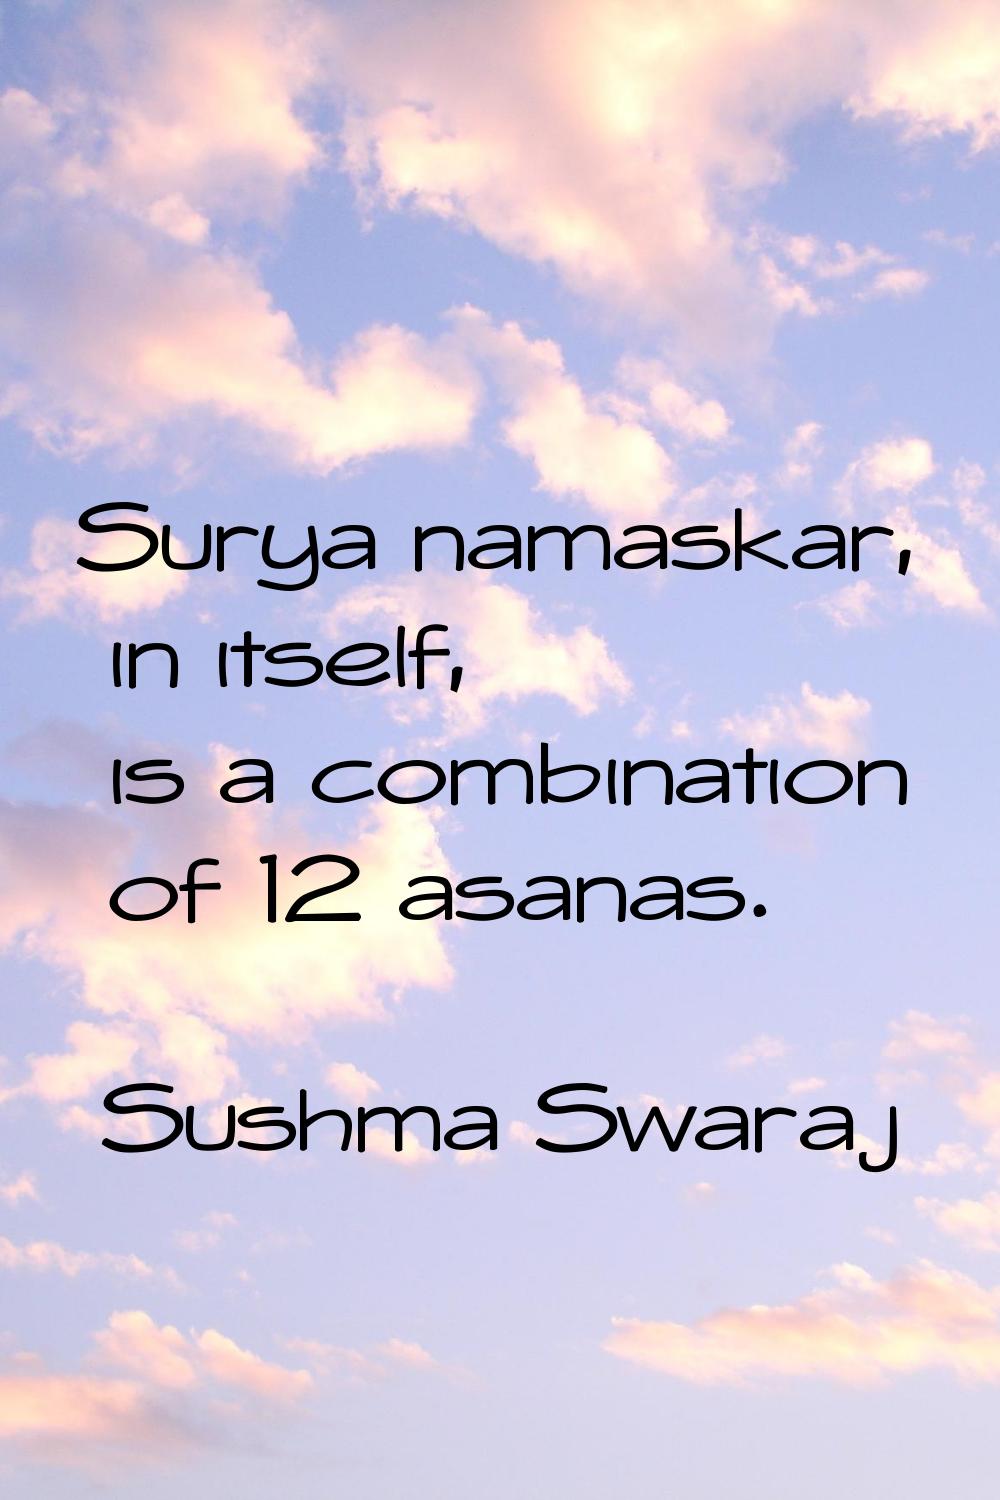 Surya namaskar, in itself, is a combination of 12 asanas.